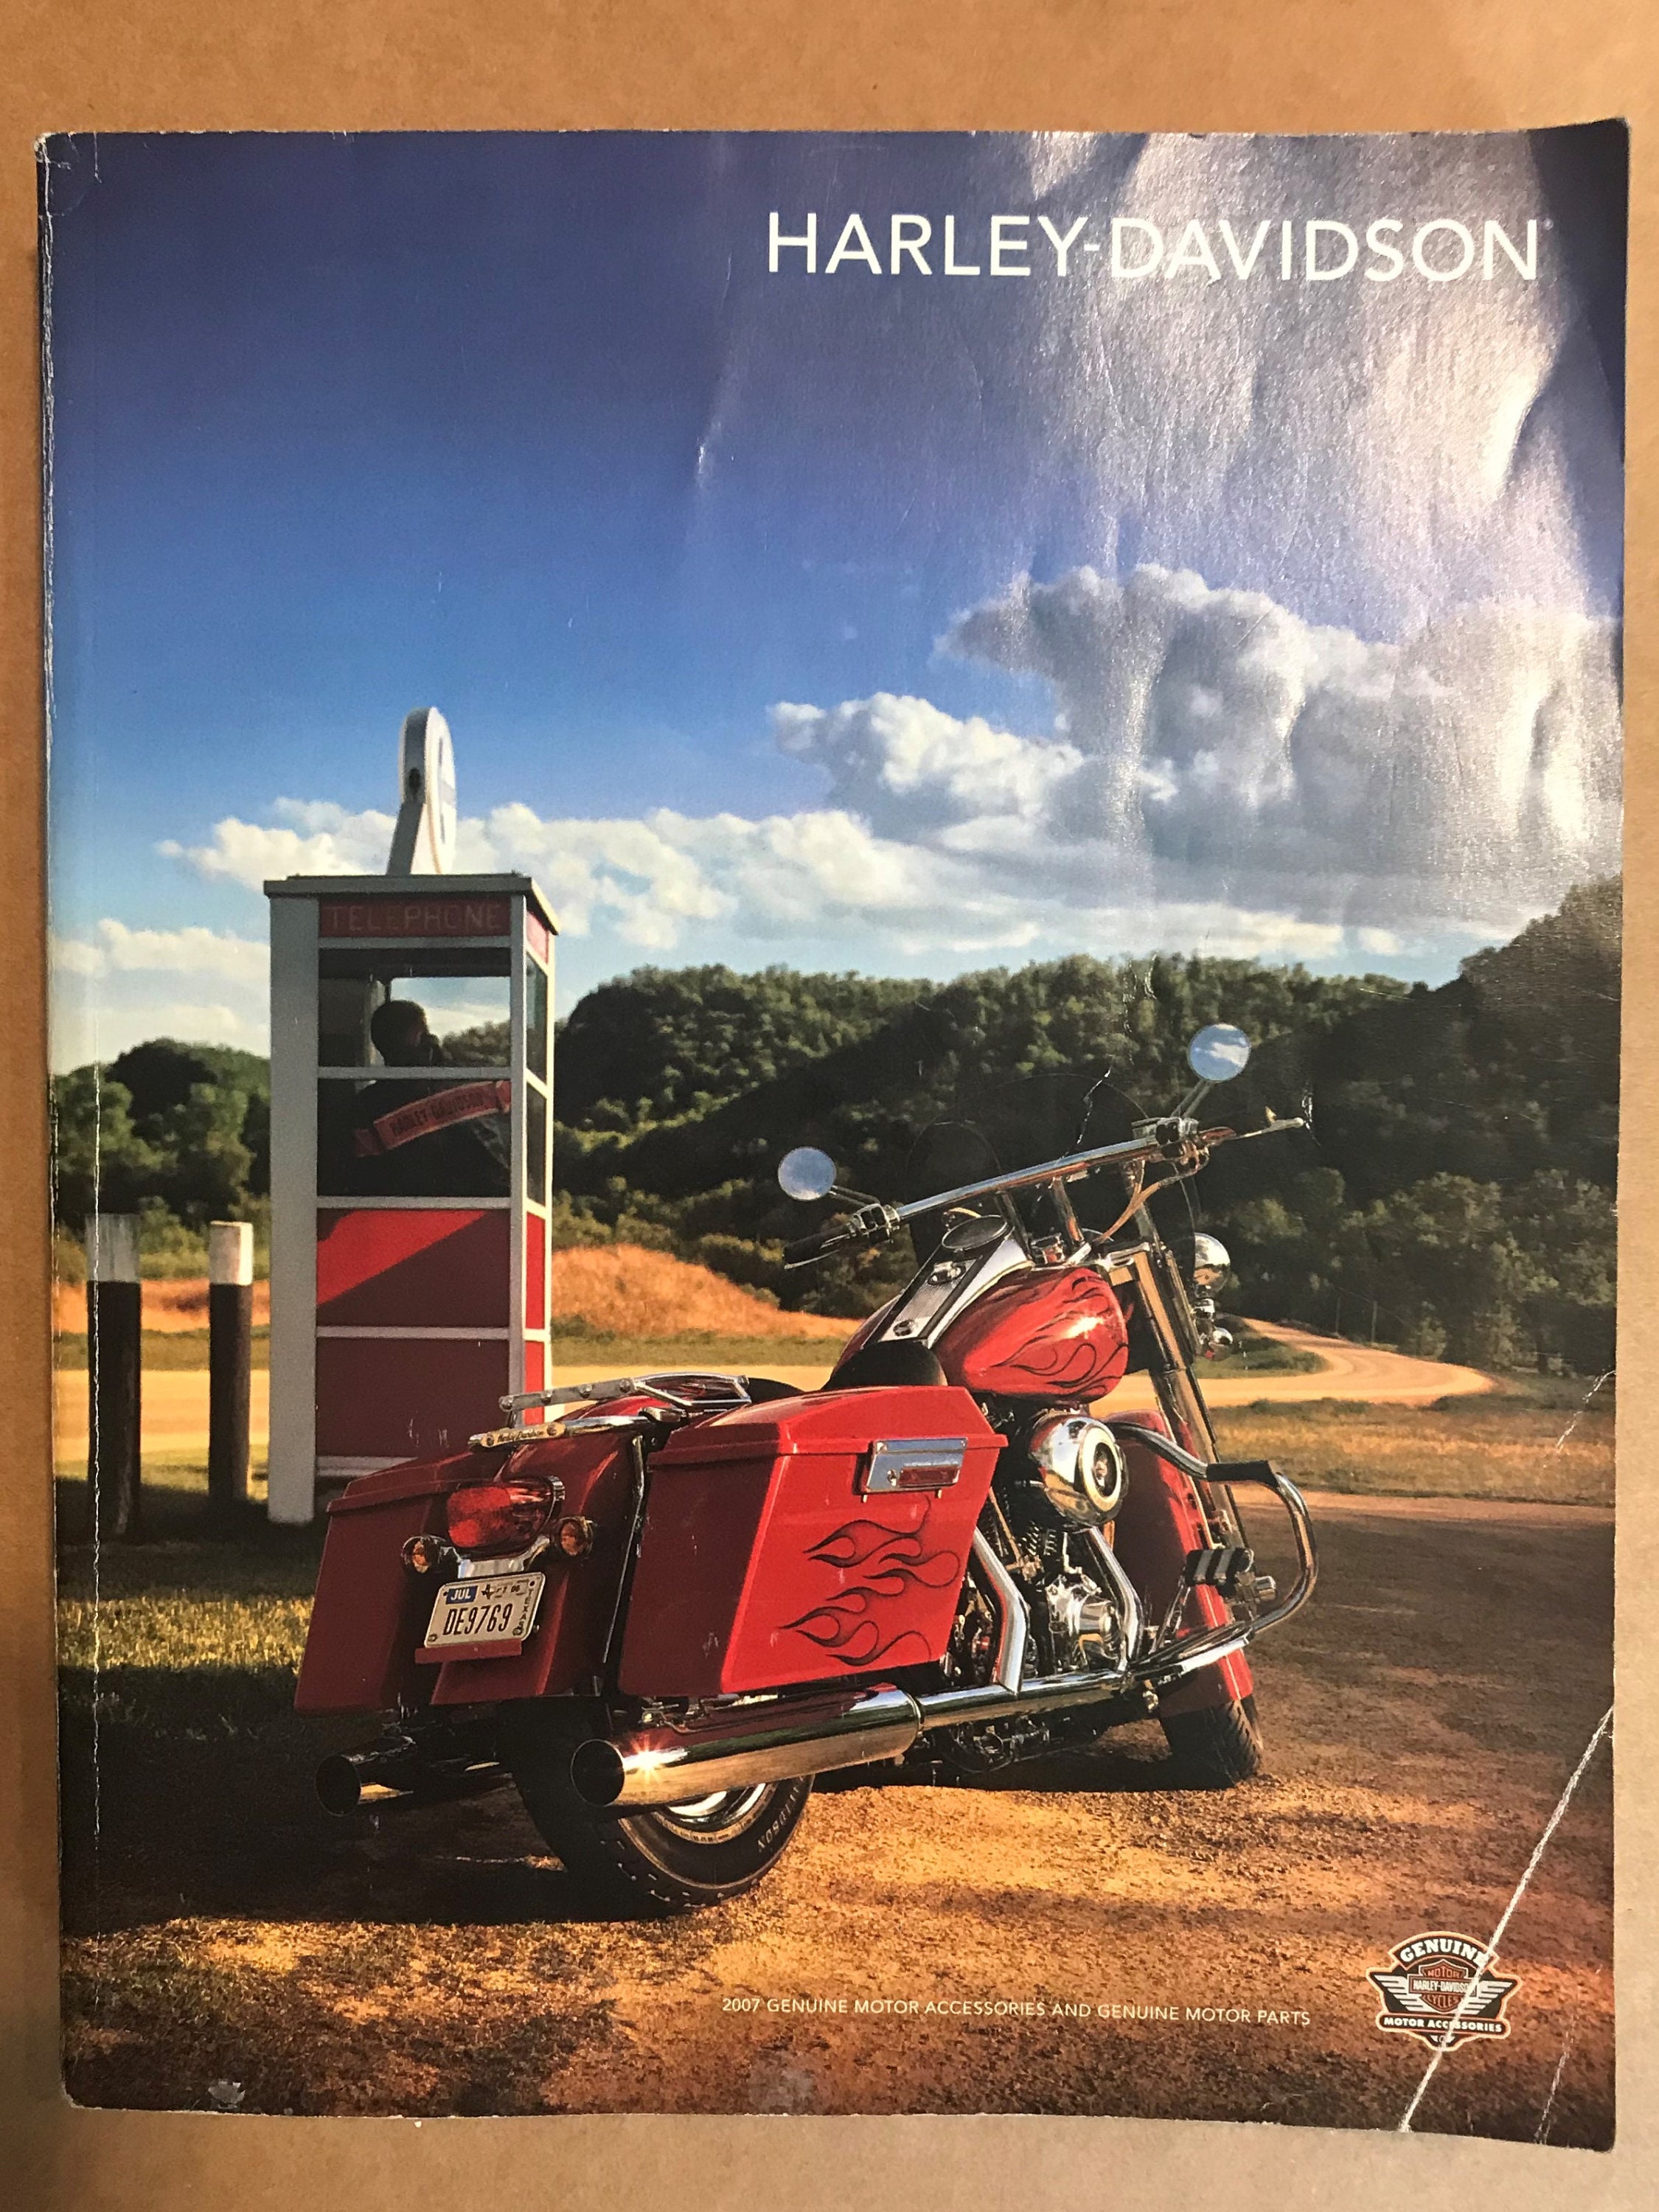 Harley-davidson 2007 Genuine Motor Accessories Catalog | Etsy